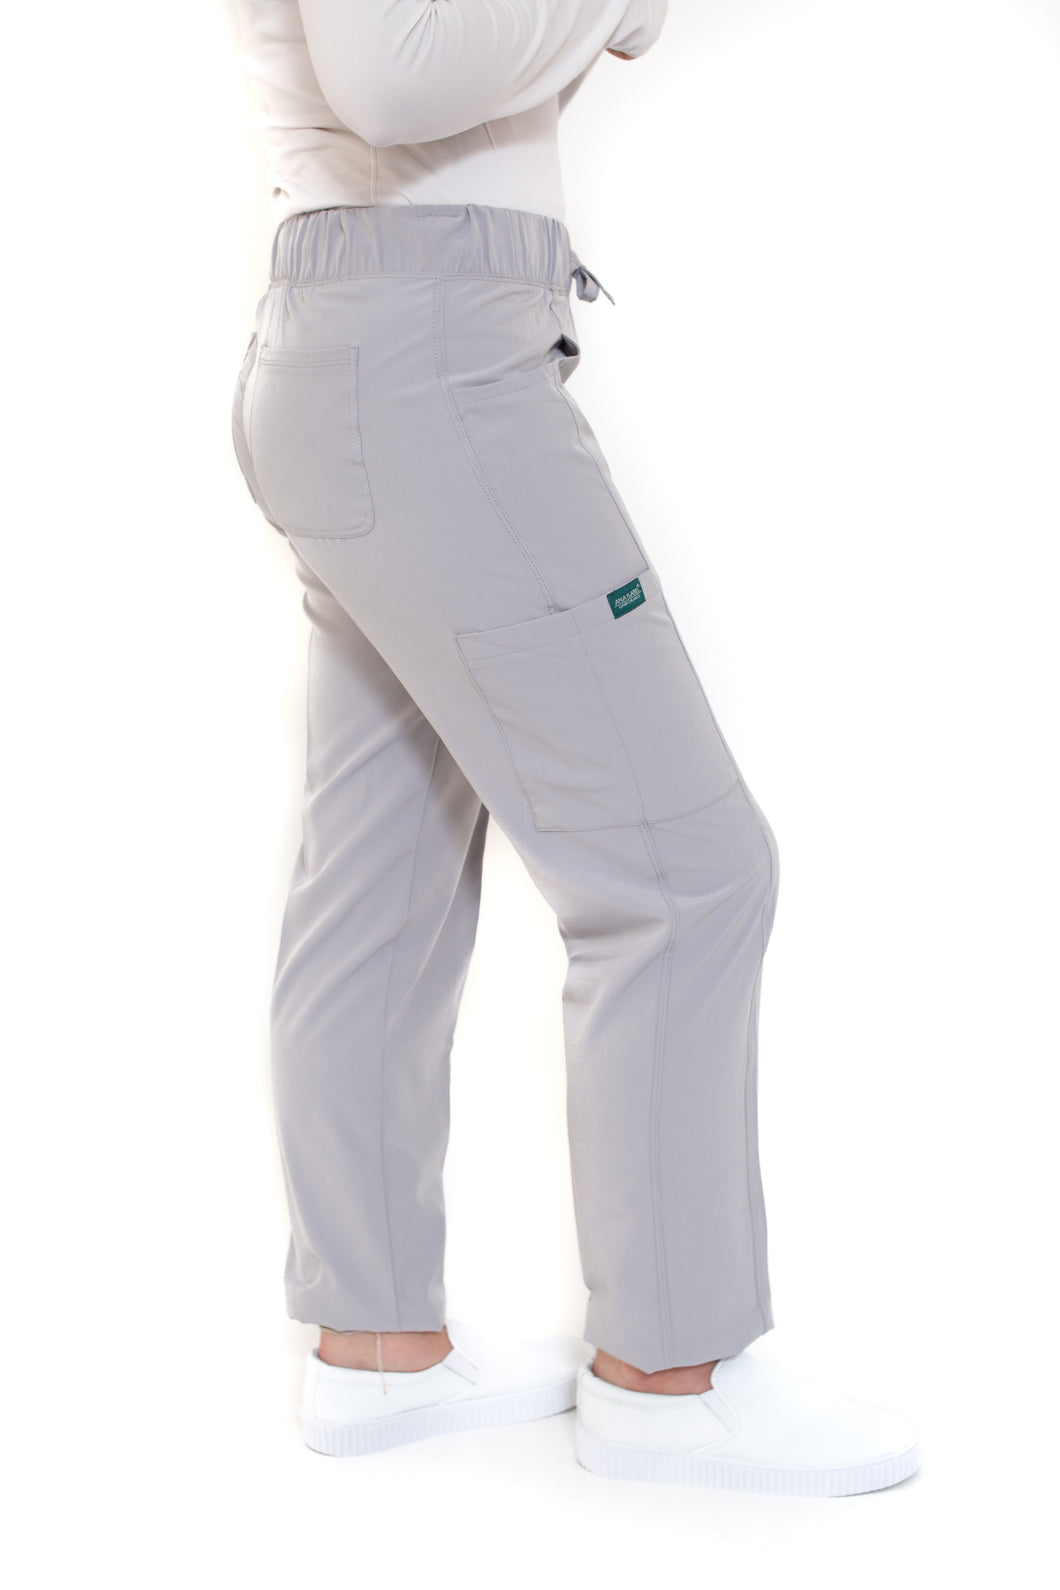 Pantalón Pant EV-120 REPELENTE A FLUIDOS-Color GRIS Dama-Ana Isabel Uniformes